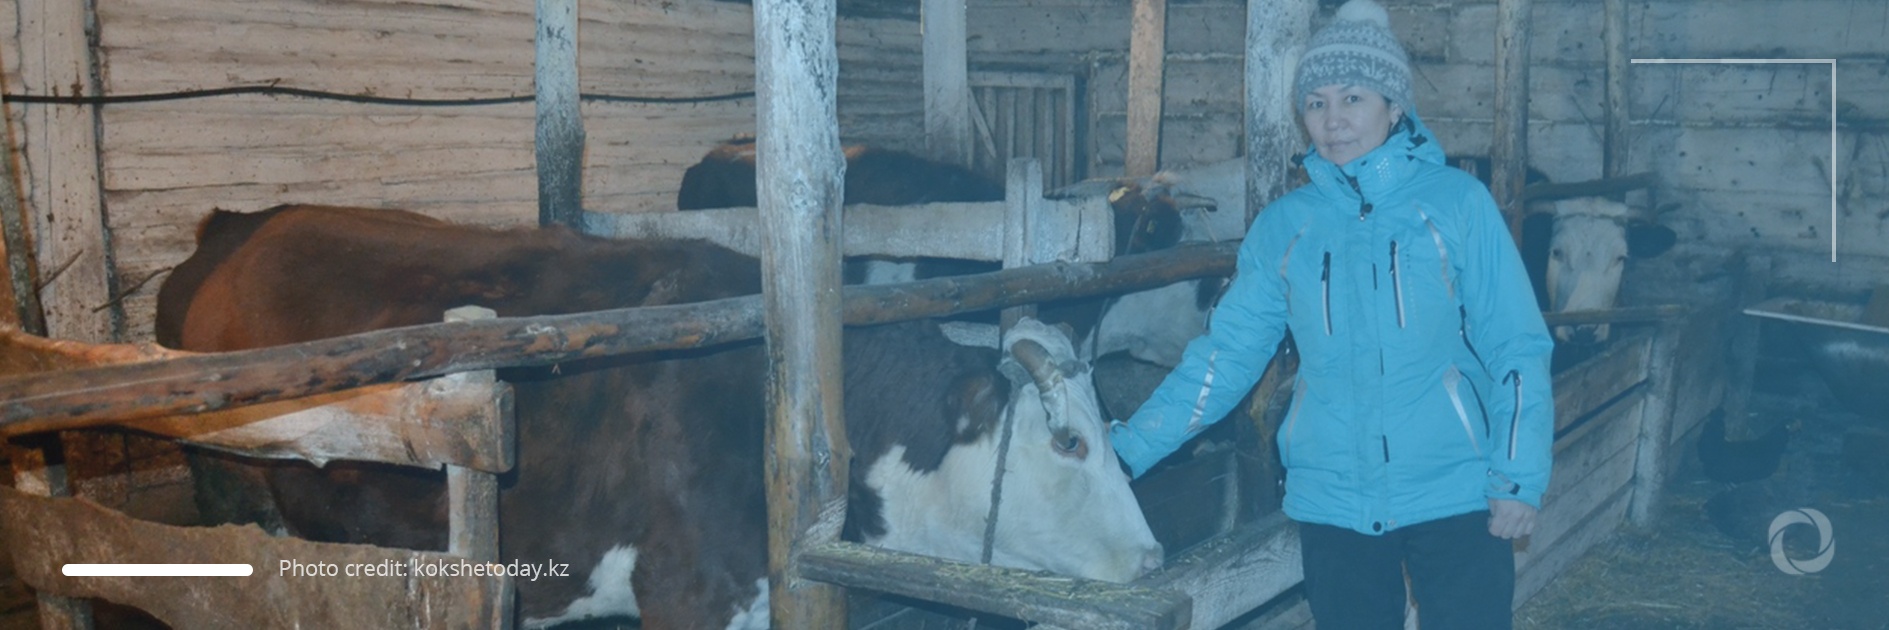 ‘Cow on a balcony’ – a business opportunity for women in rural Kazakhstan